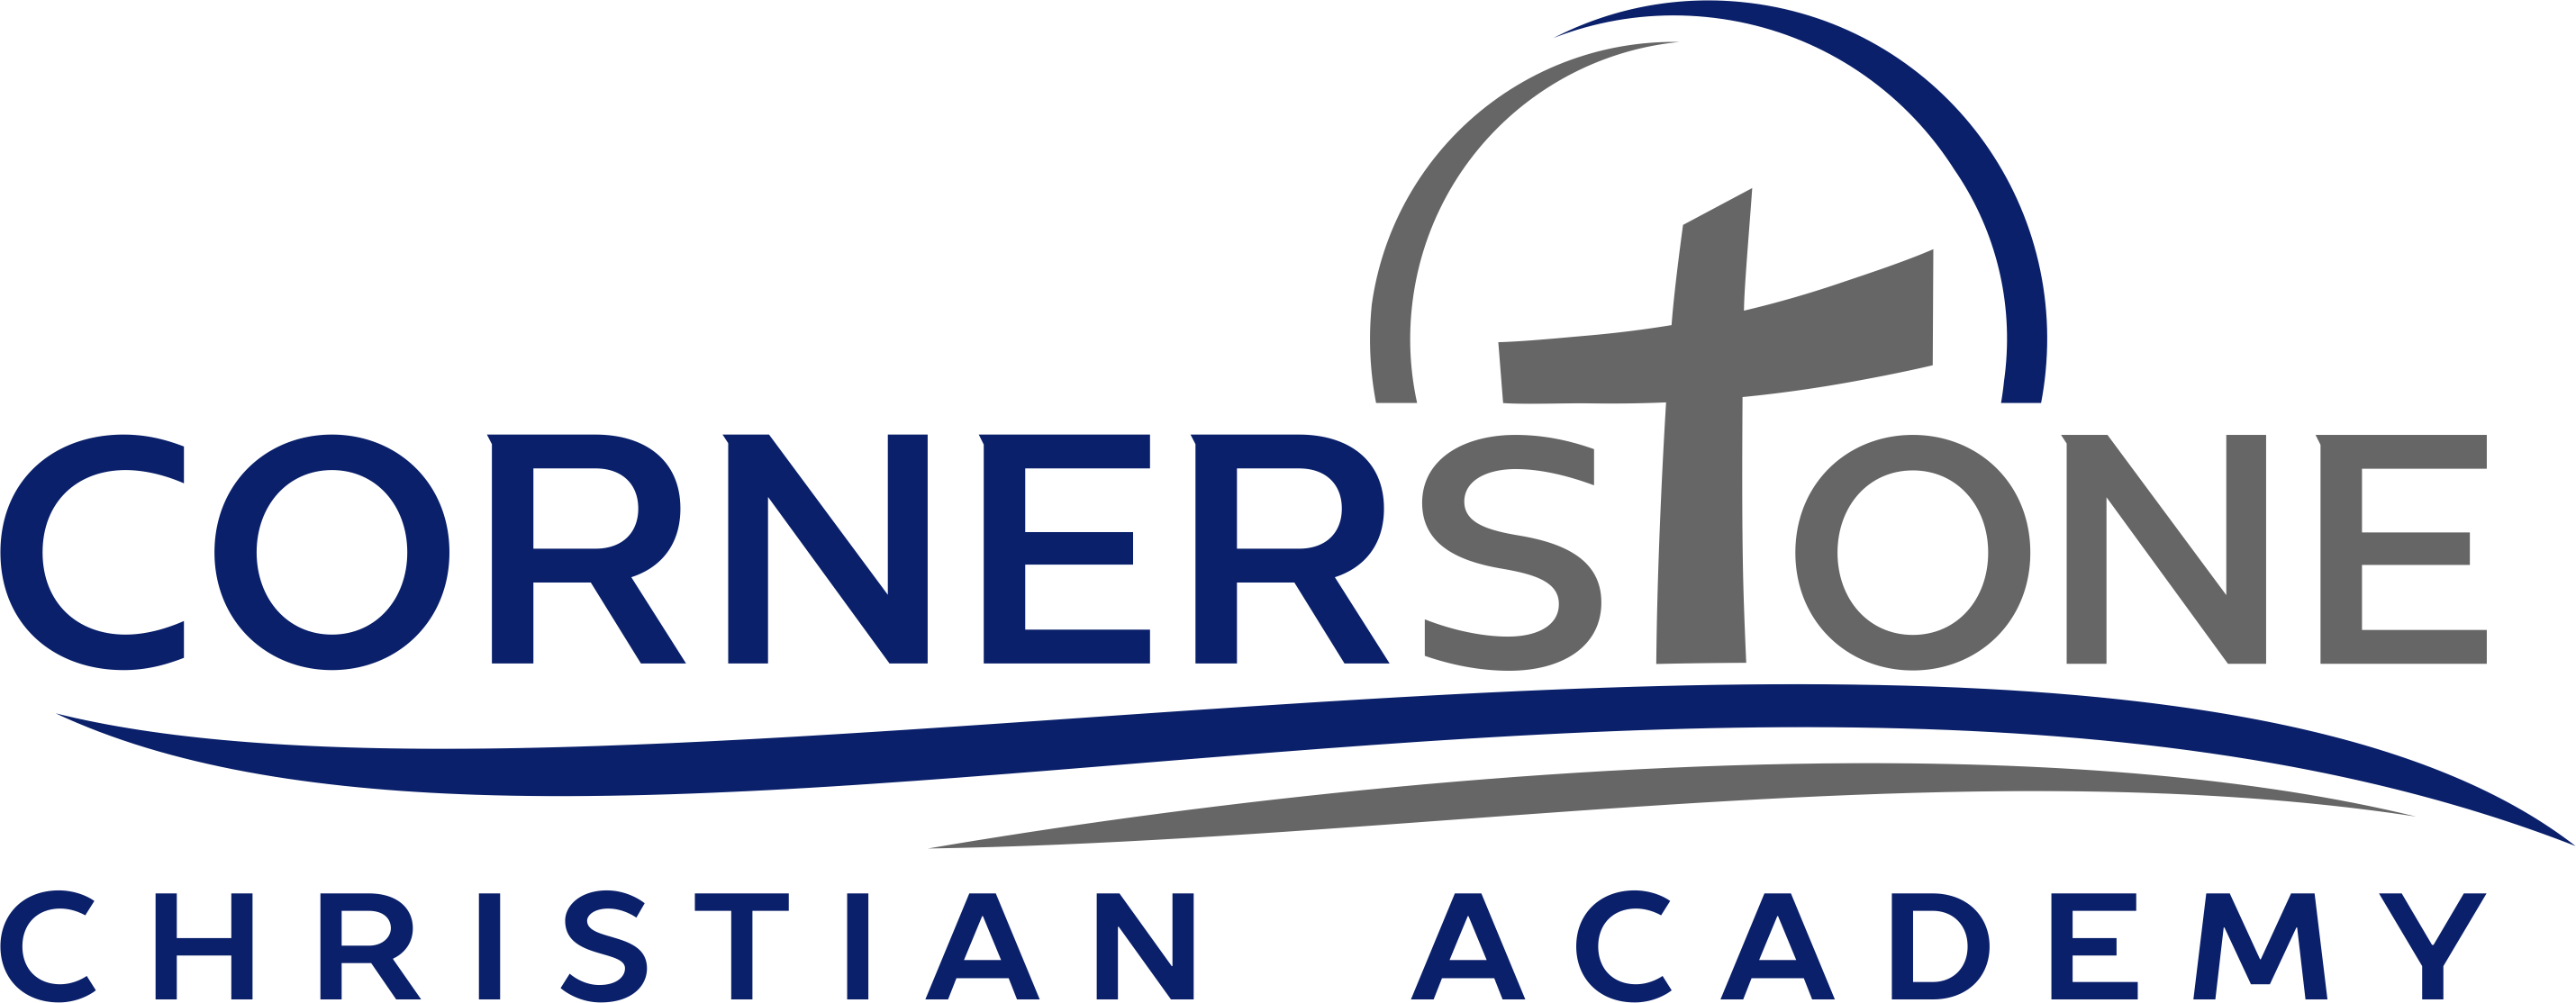 Cornerstone Christian Academy LOGO